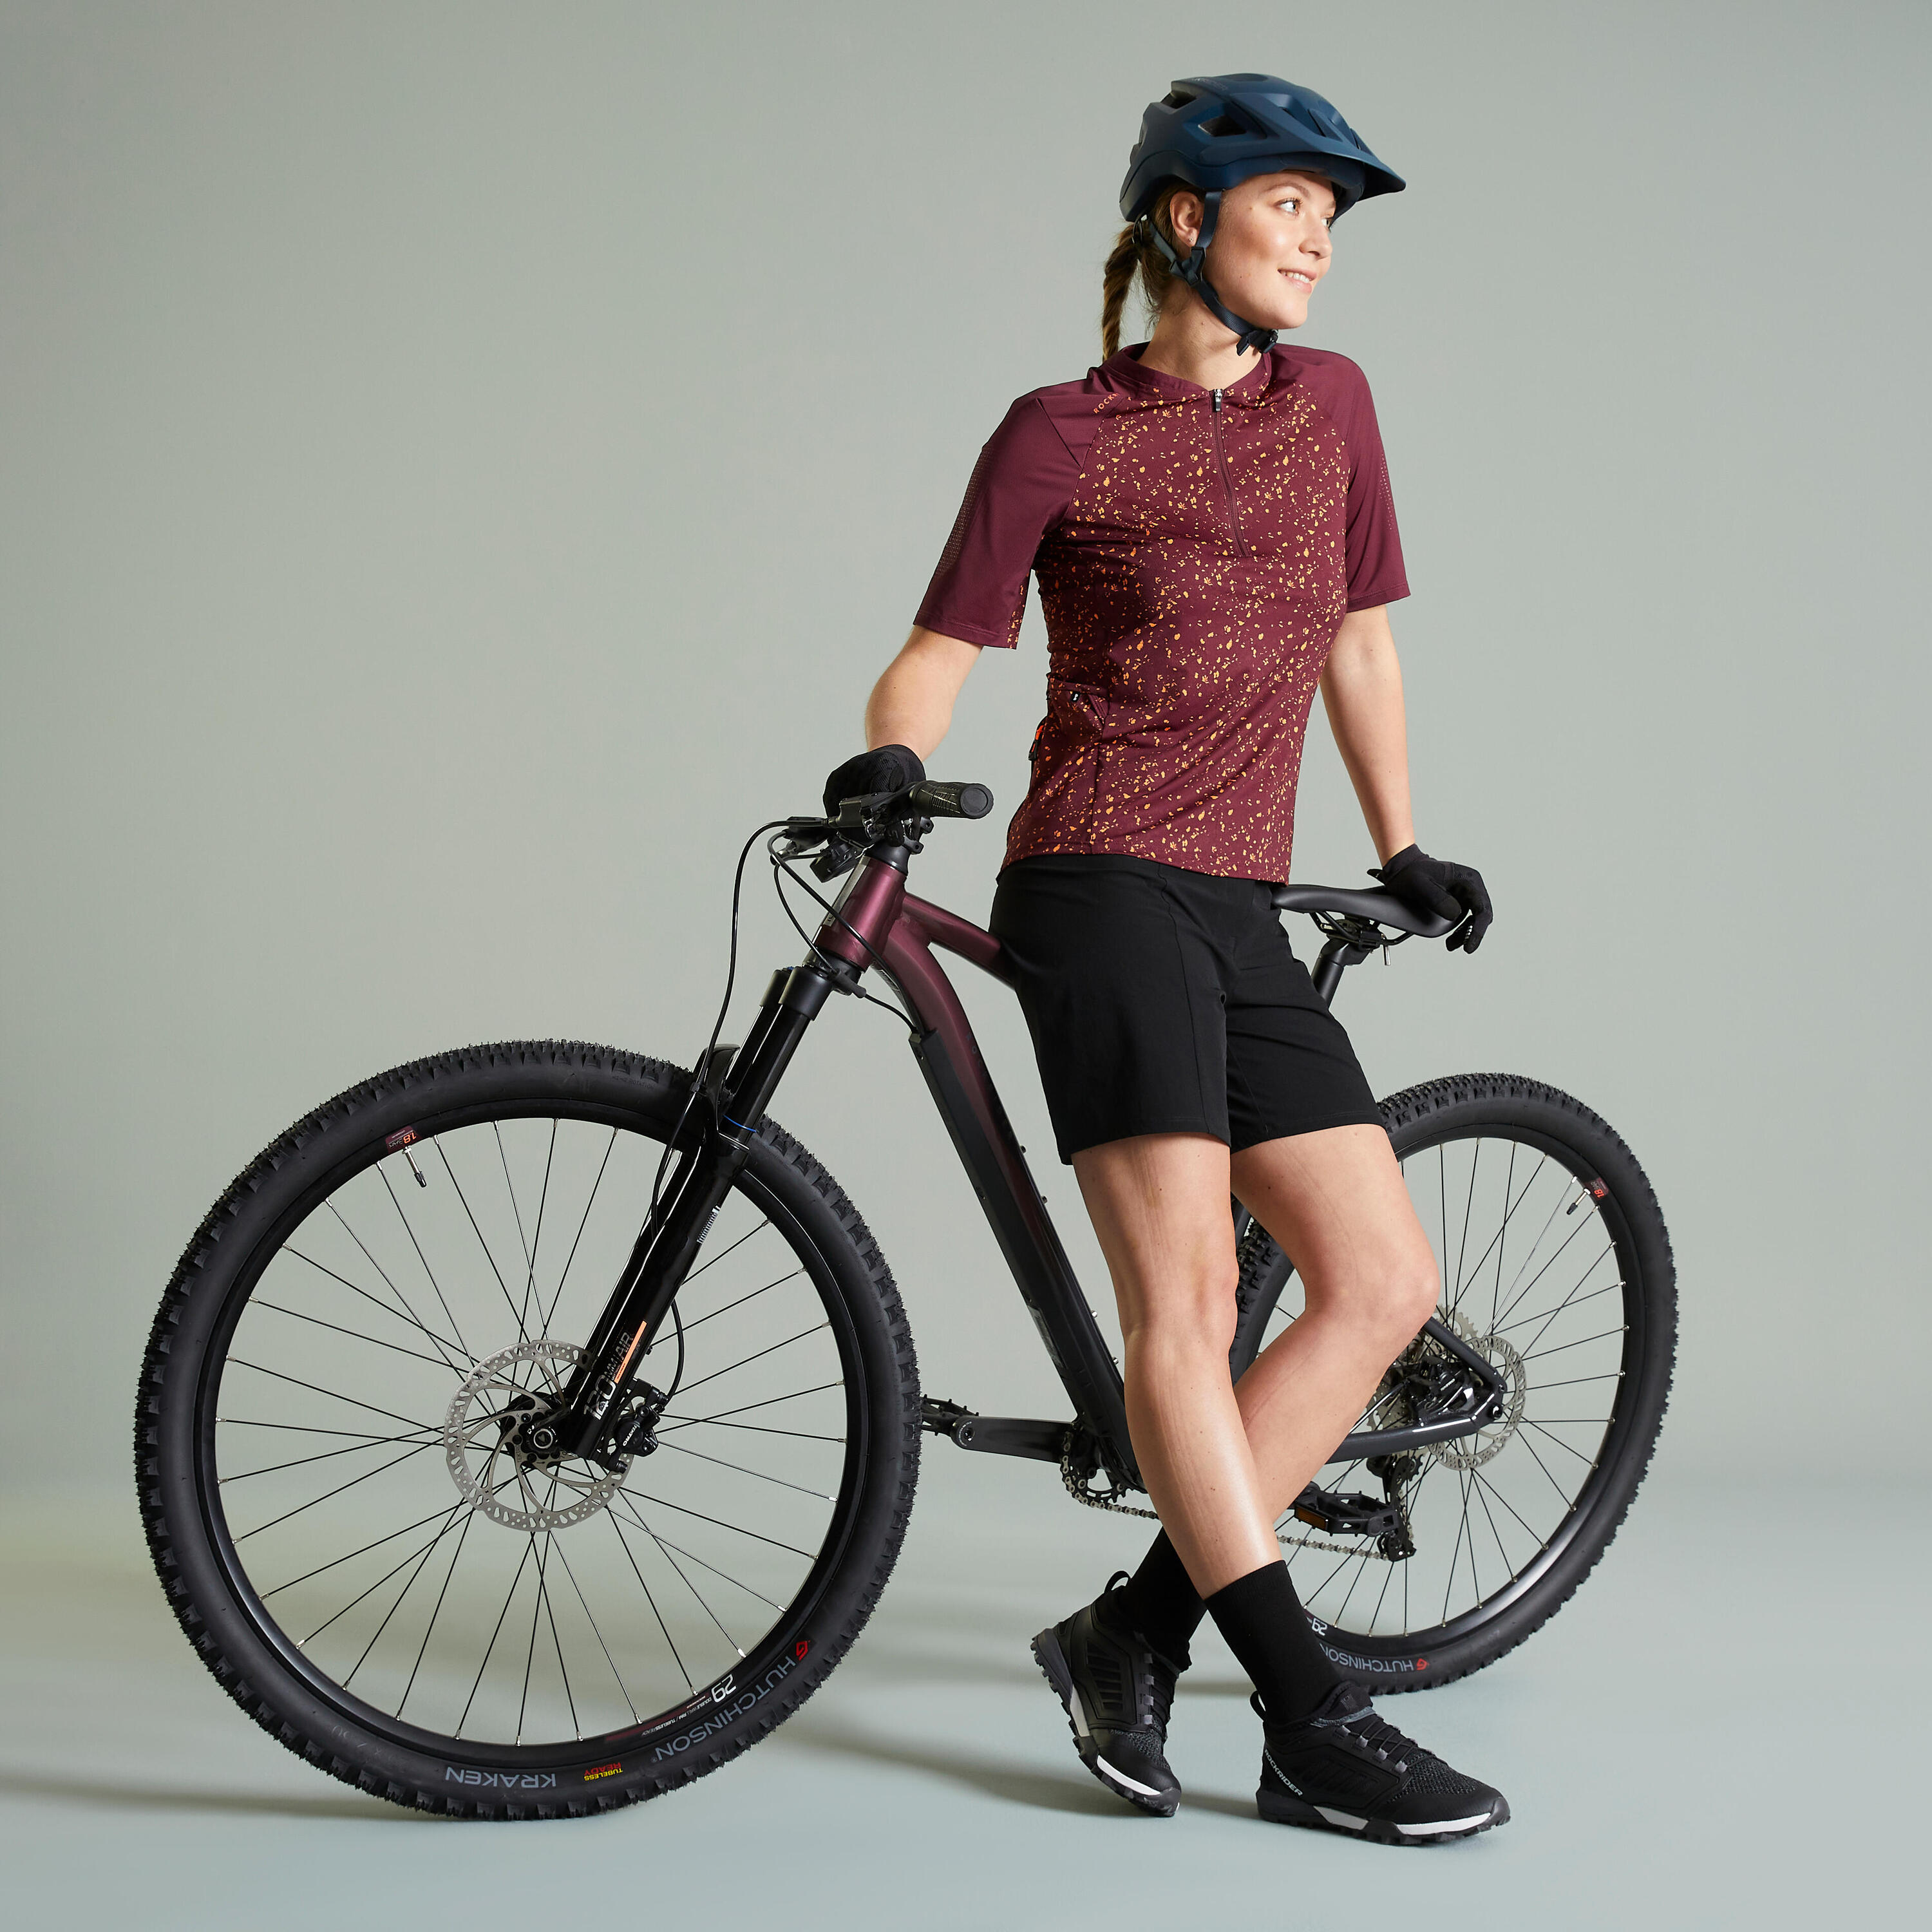 Women's Mountain Biking Shorts Expl 500 - Black 10/12